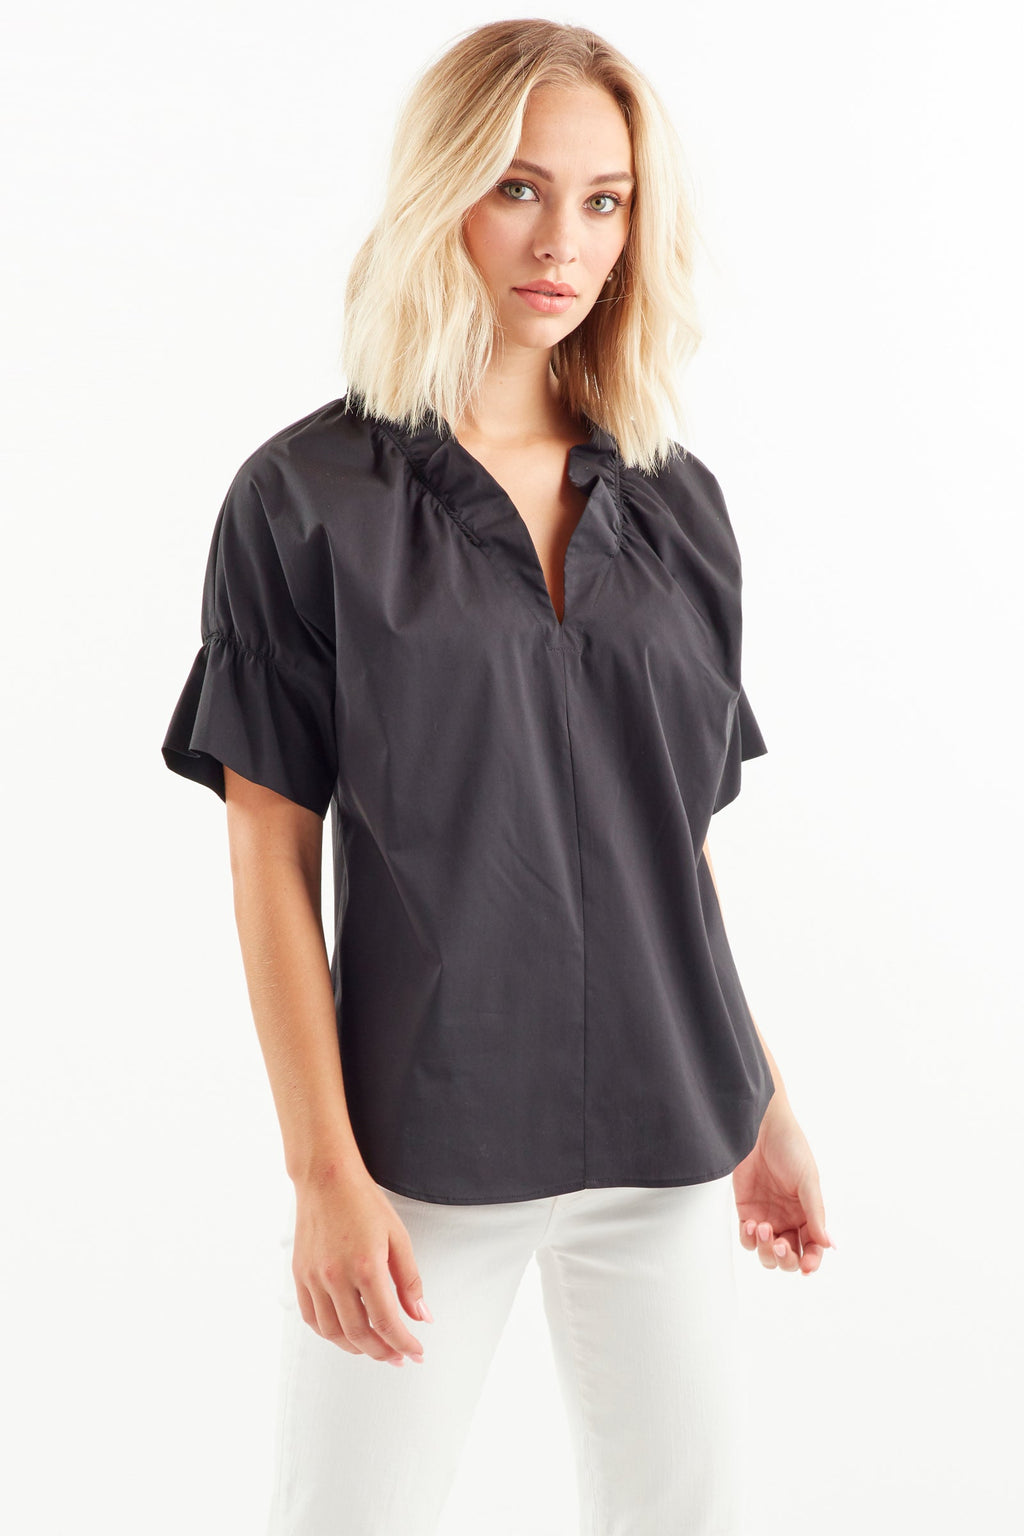 Women's Ruffle Collar Short Sleeve Black Blouse | Finley Shirts